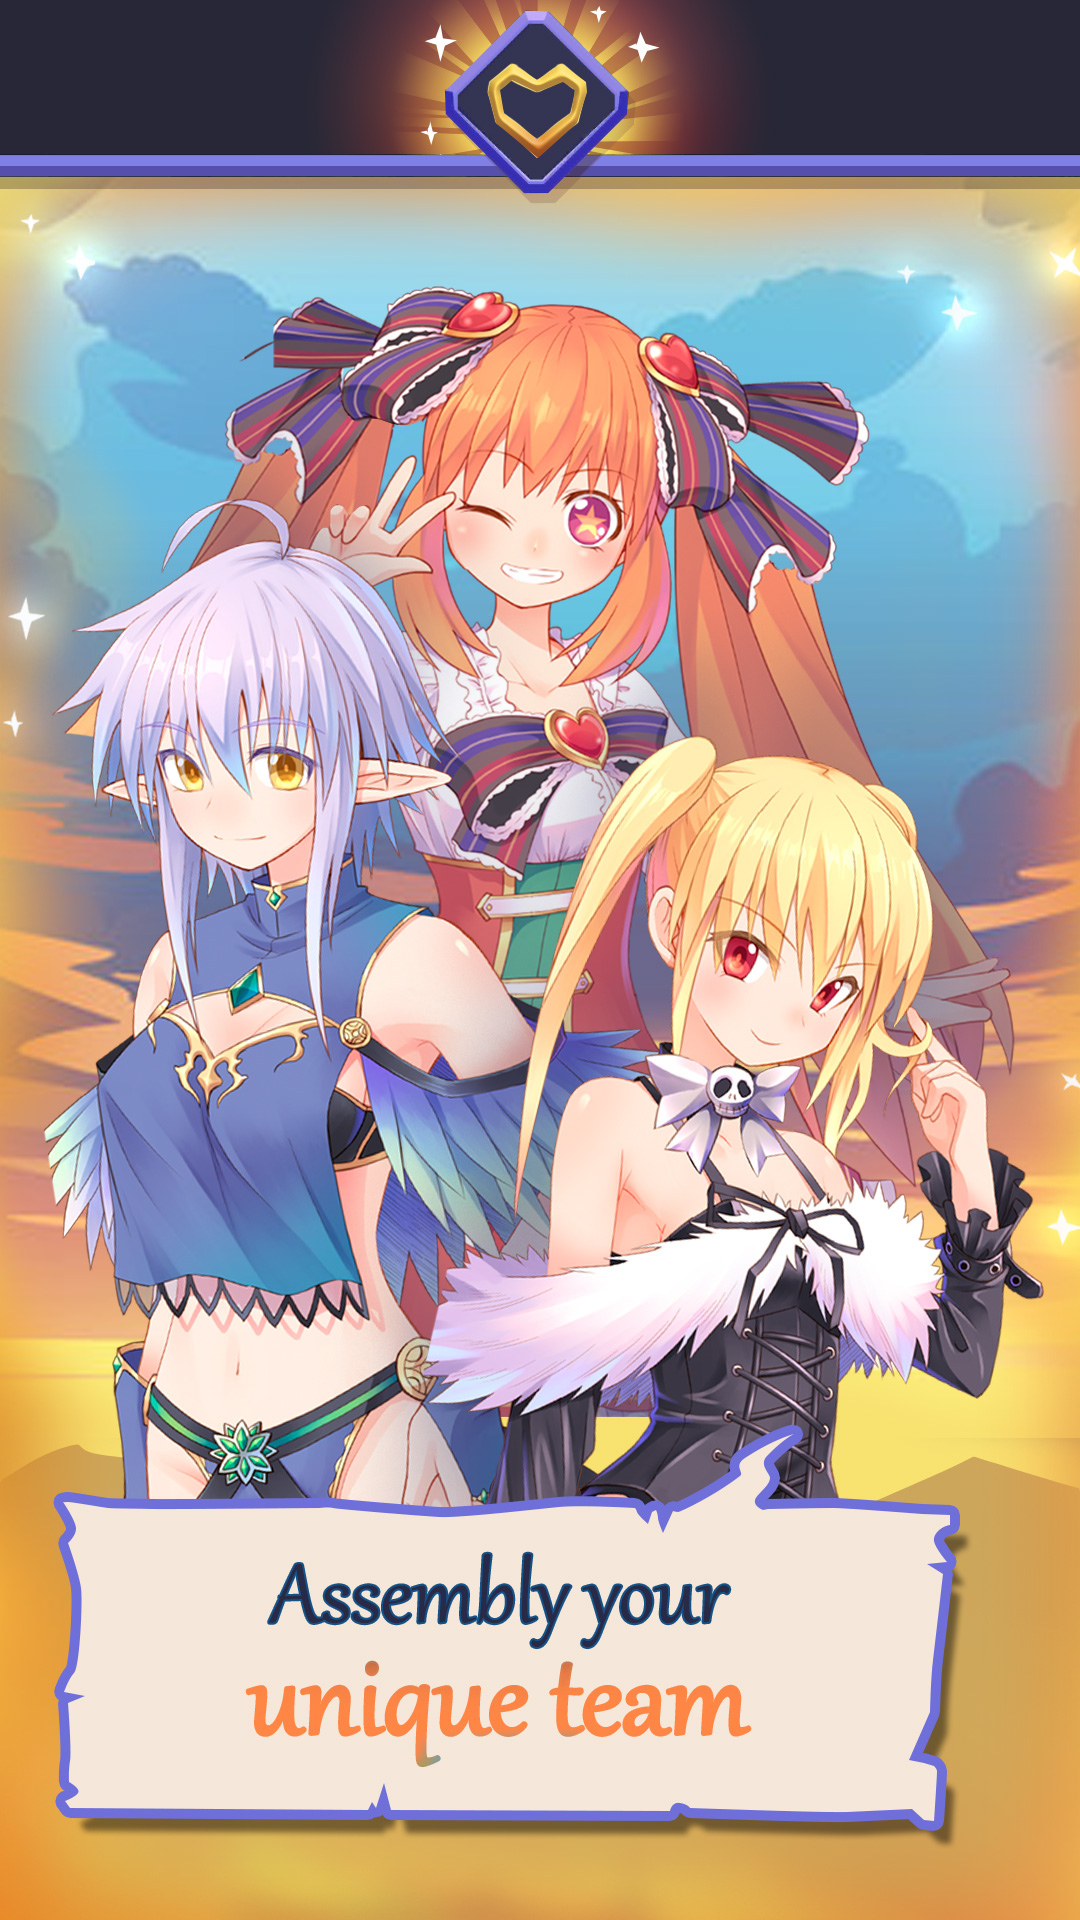 Télécharger Fantasy town: Anime girls story pour Android gratuit.